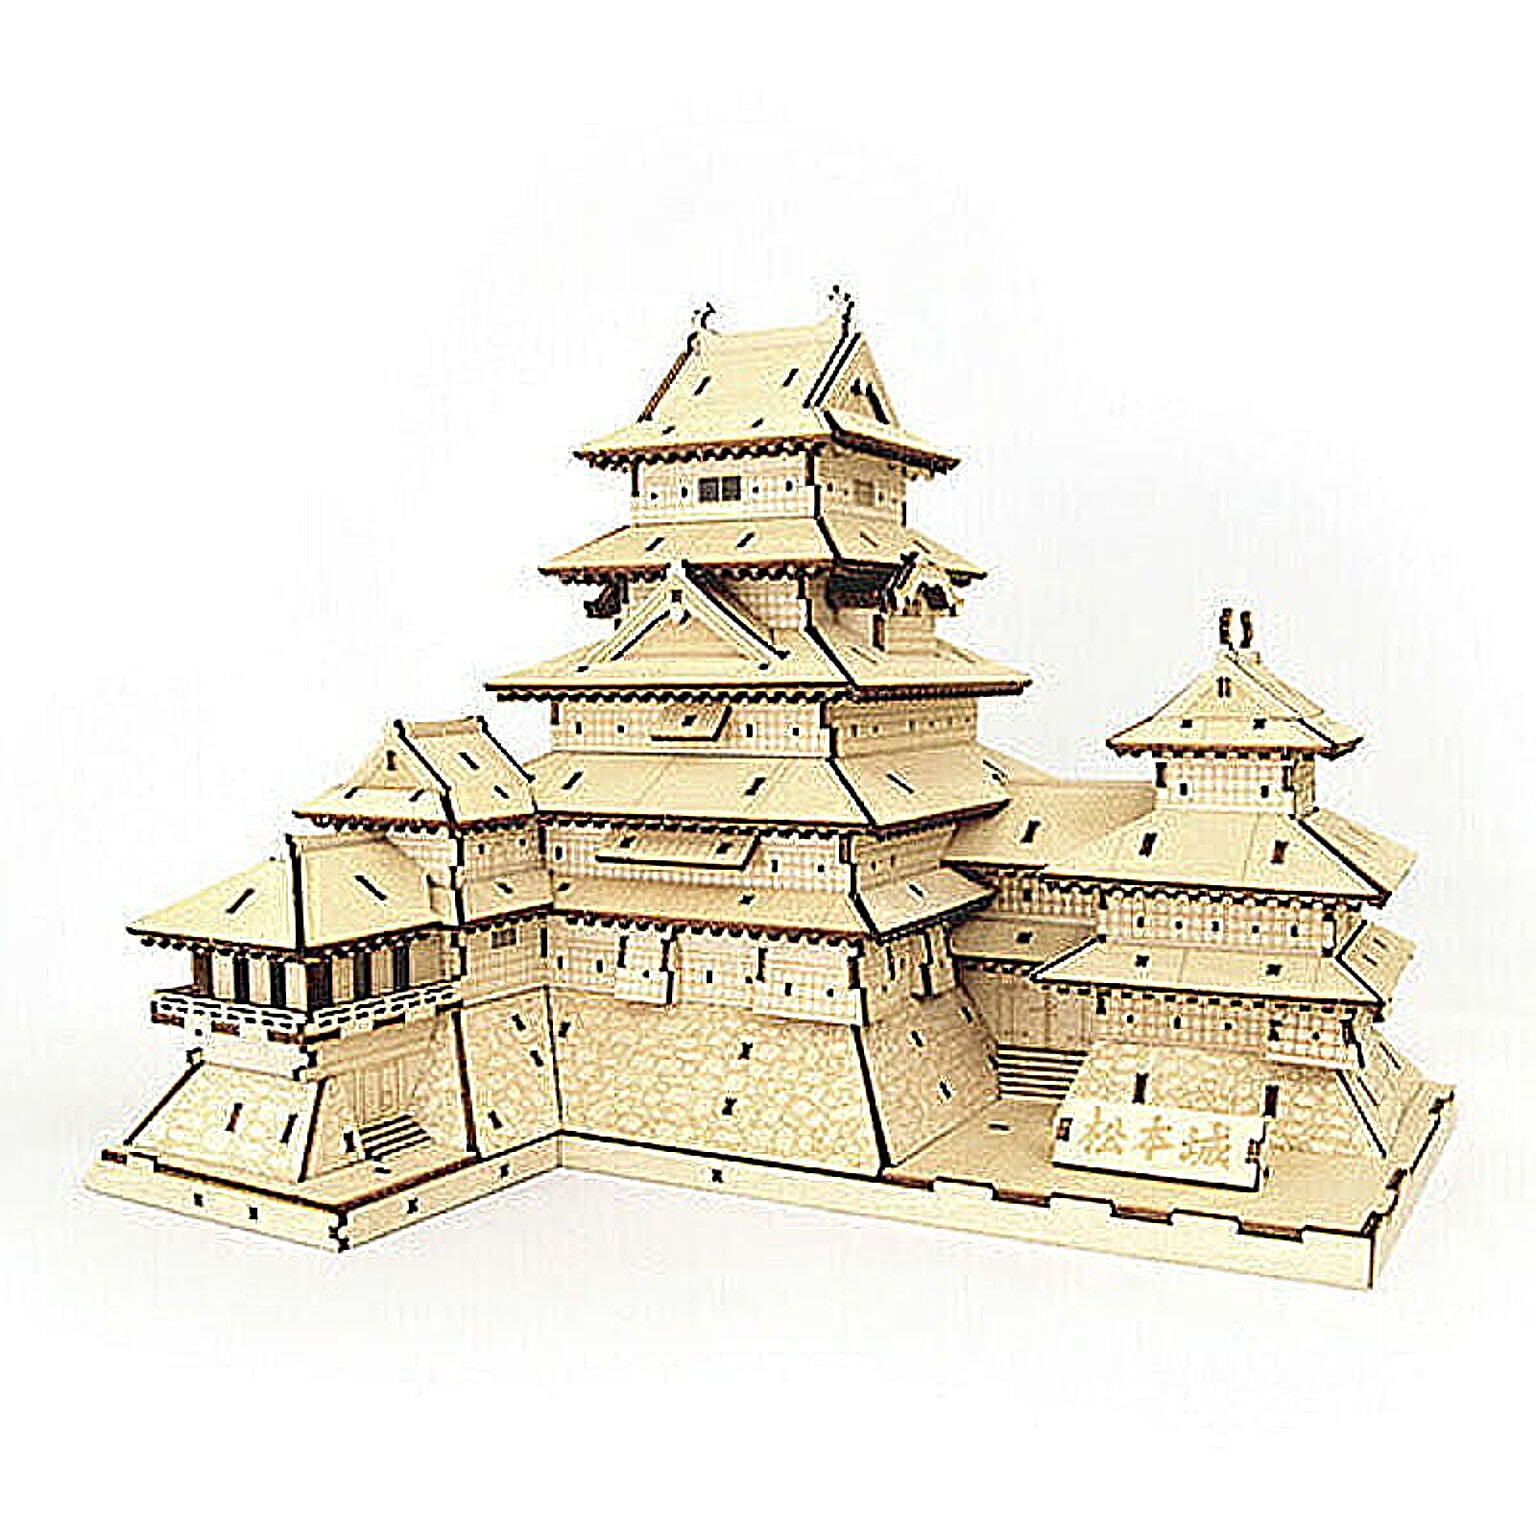 エーゾーン Wooden Art ki-gu-mi 松本城 KGM12022 管理No. 4580423512022